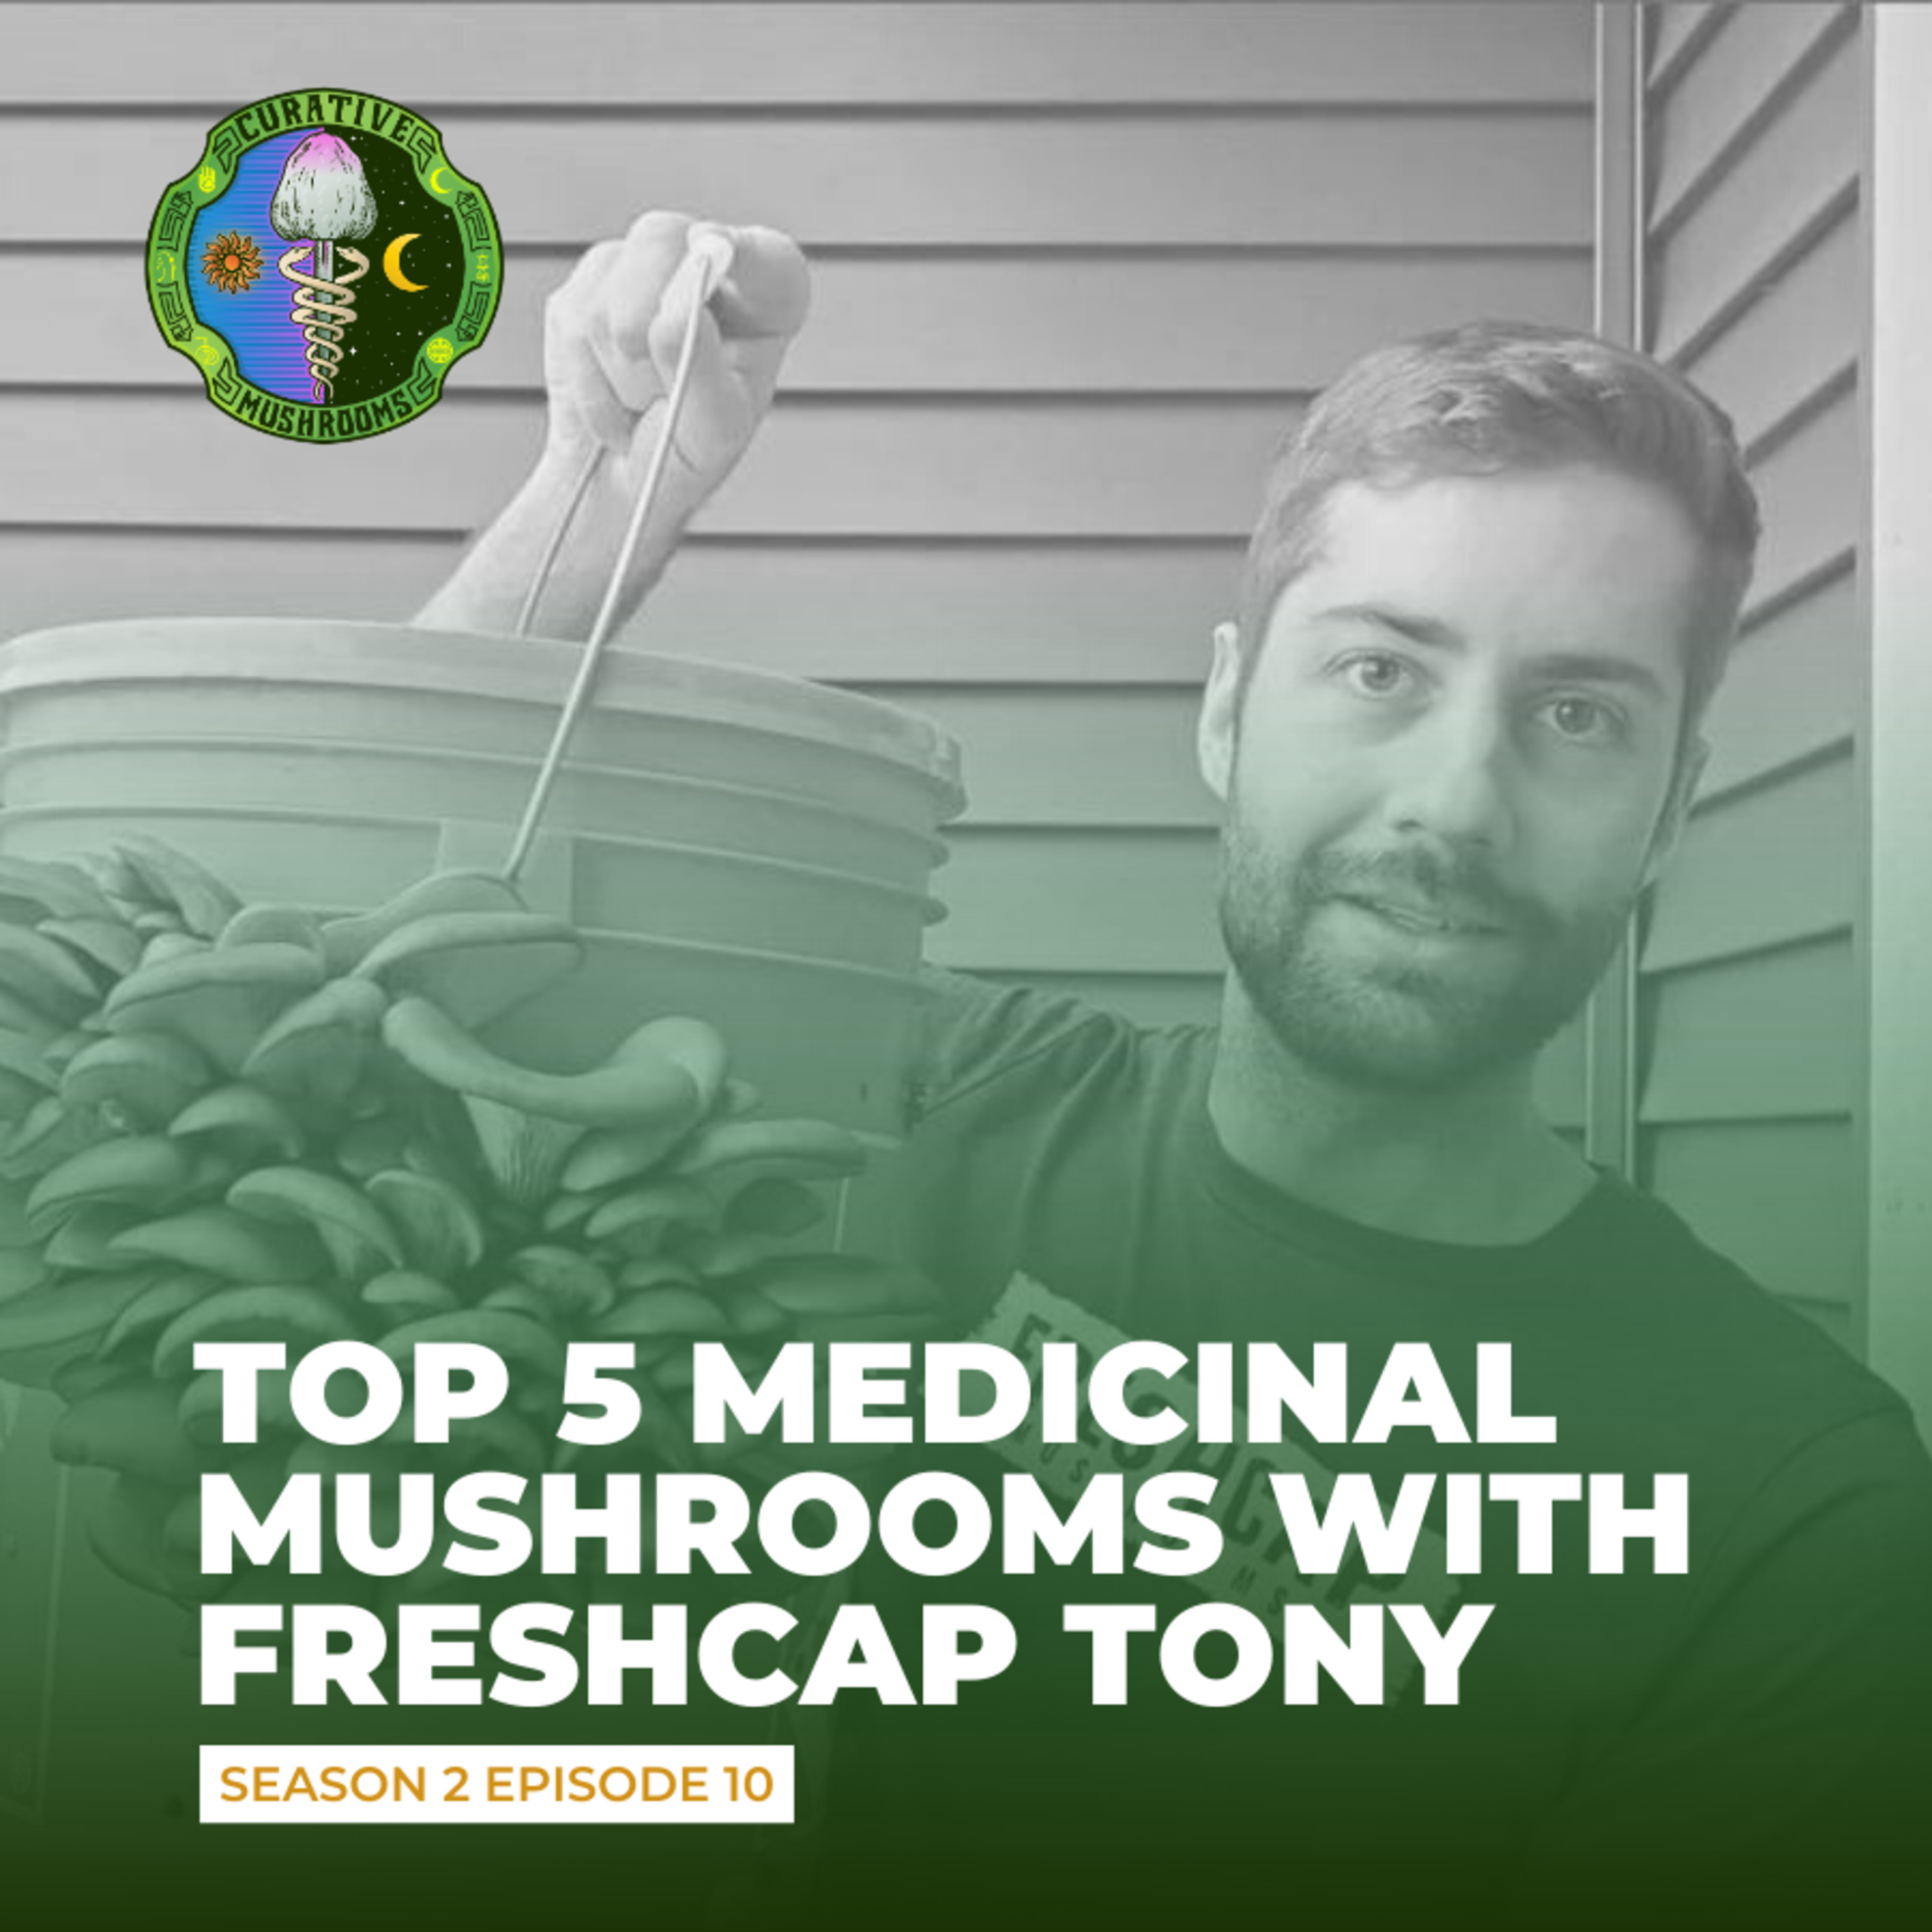 Talking The Top 5 Medicinal Mushrooms With FreshCap Tony...